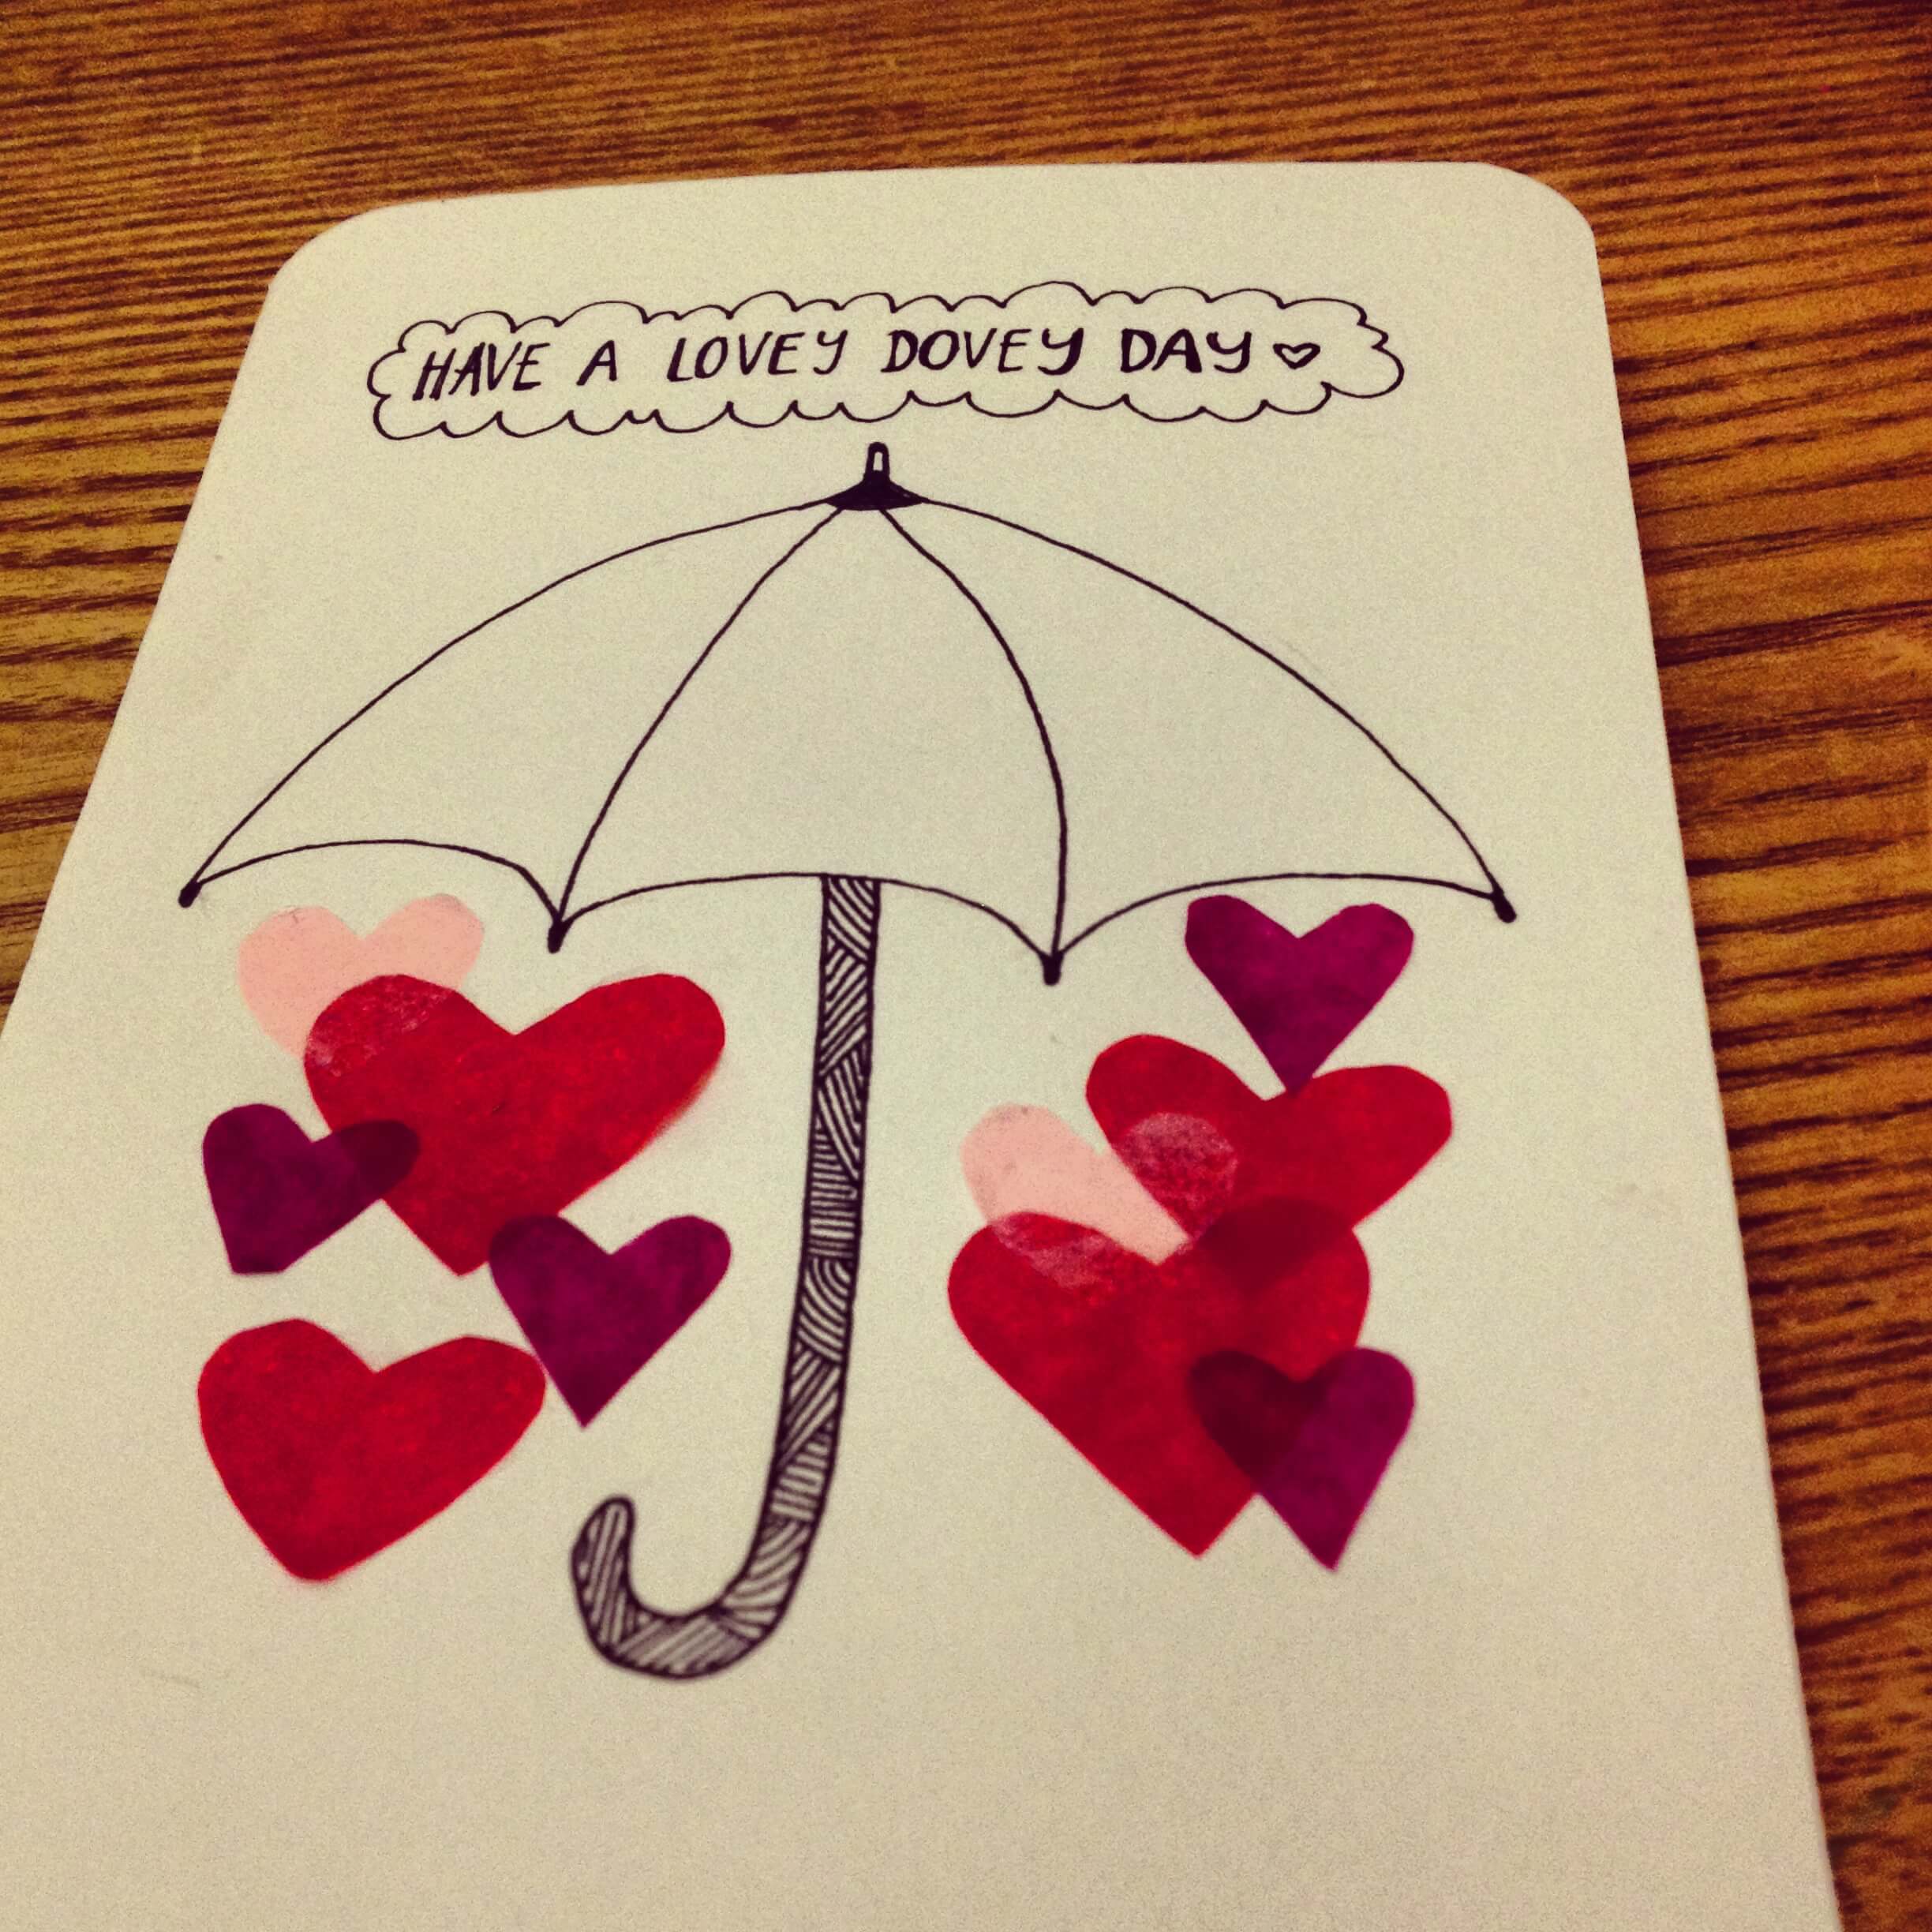 DIY Valentine’s cards